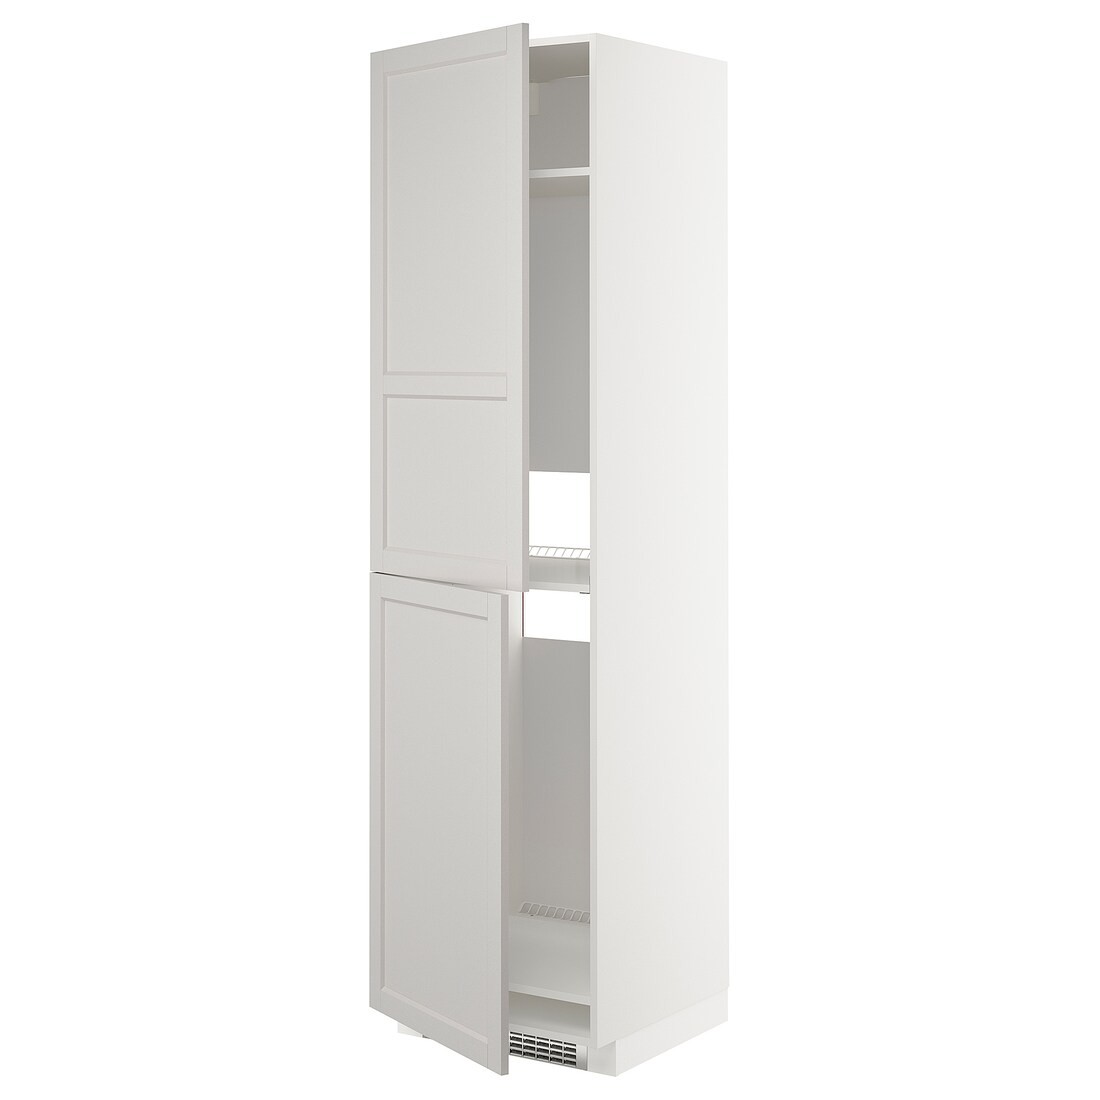 IKEA METOD МЕТОД Высокий шкаф для холодильника / морозильника, белый / Lerhyttan светло-серый, 60x60x220 см 49274461 492.744.61